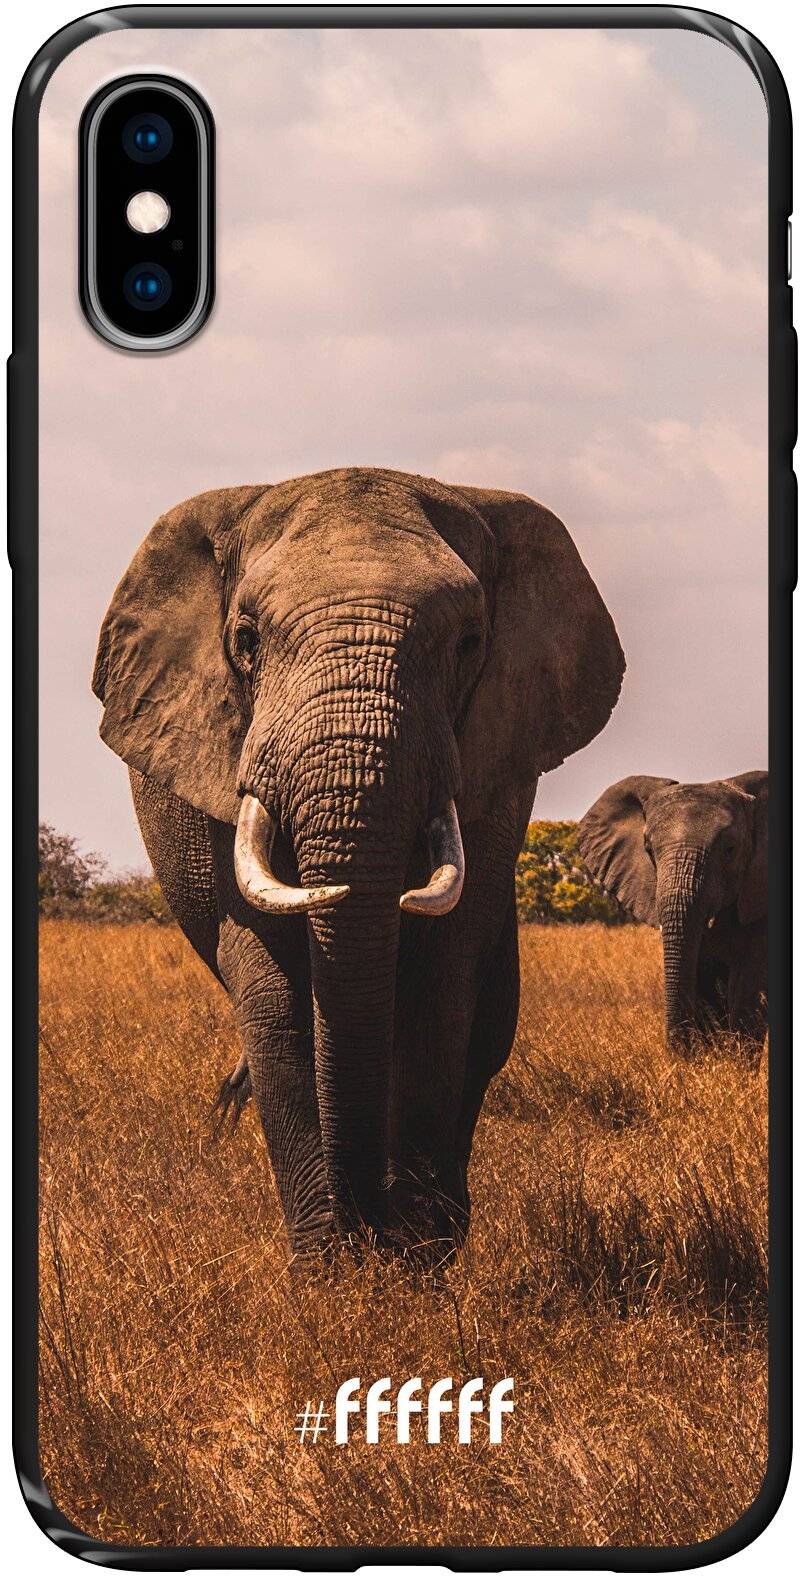 Elephants iPhone Xs